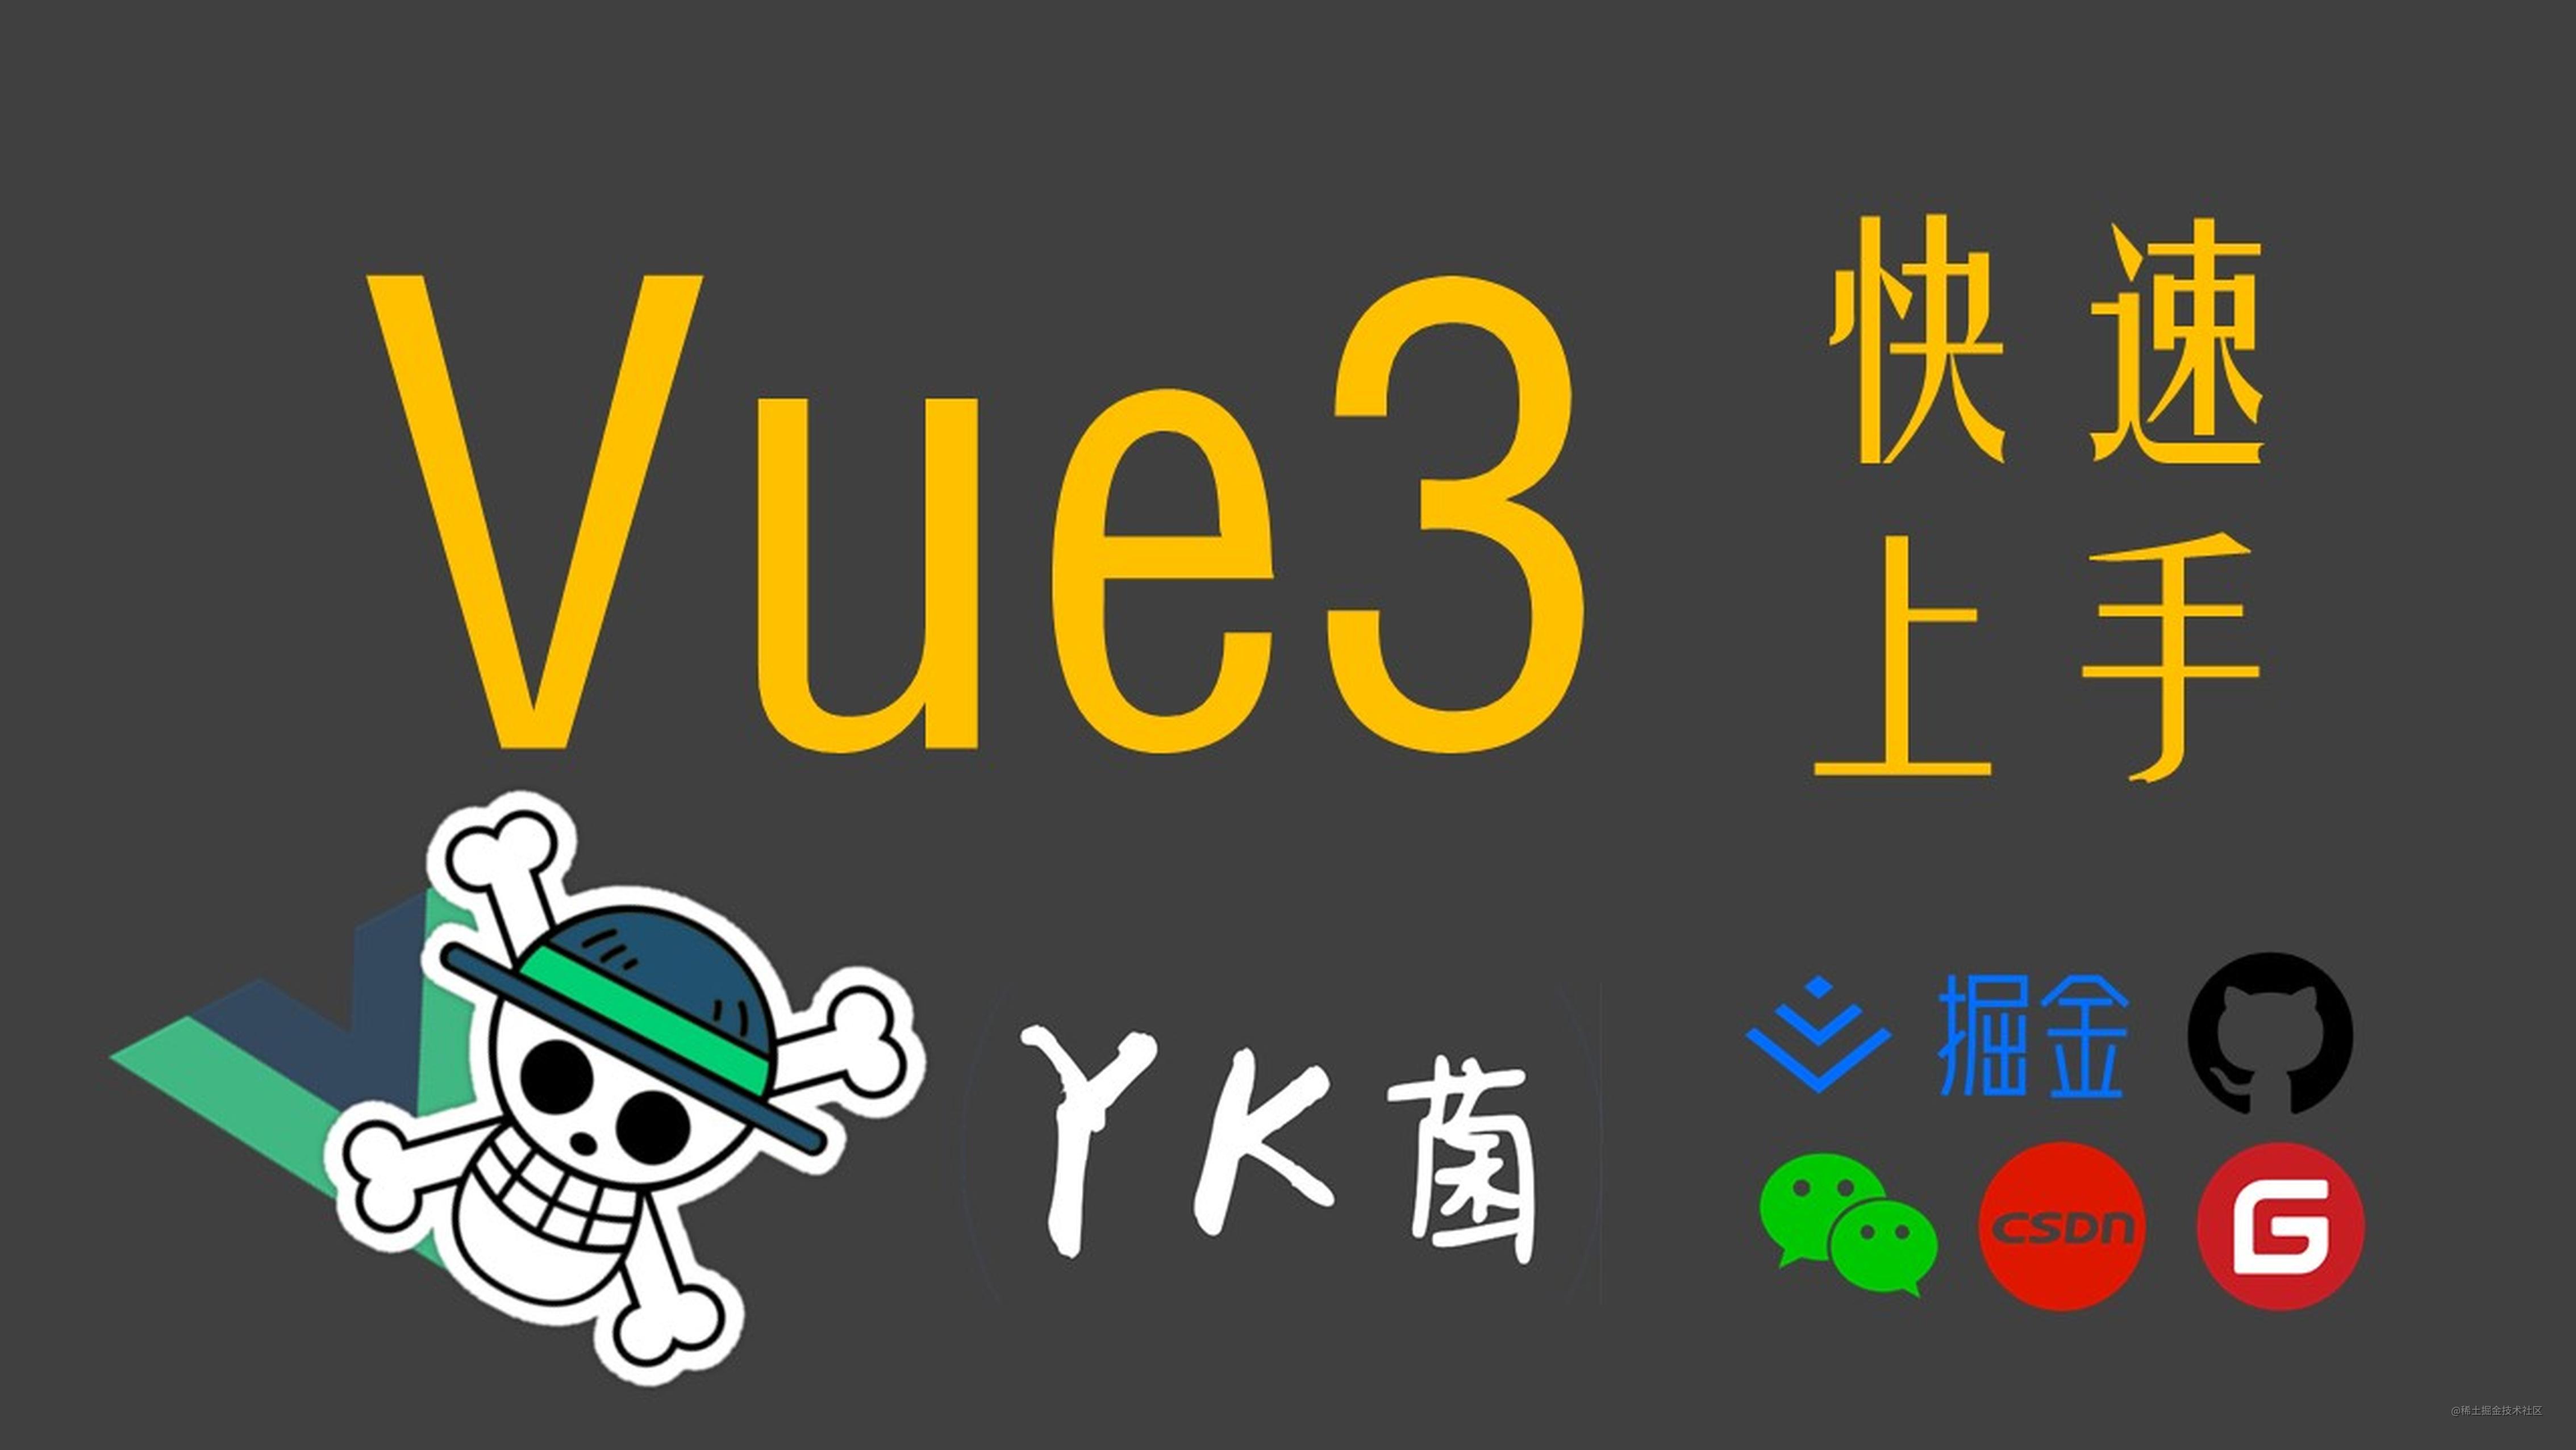 【Vue】带你快速上手Vue3 - 使用 - Composition API - 响应式原理 - 新特性